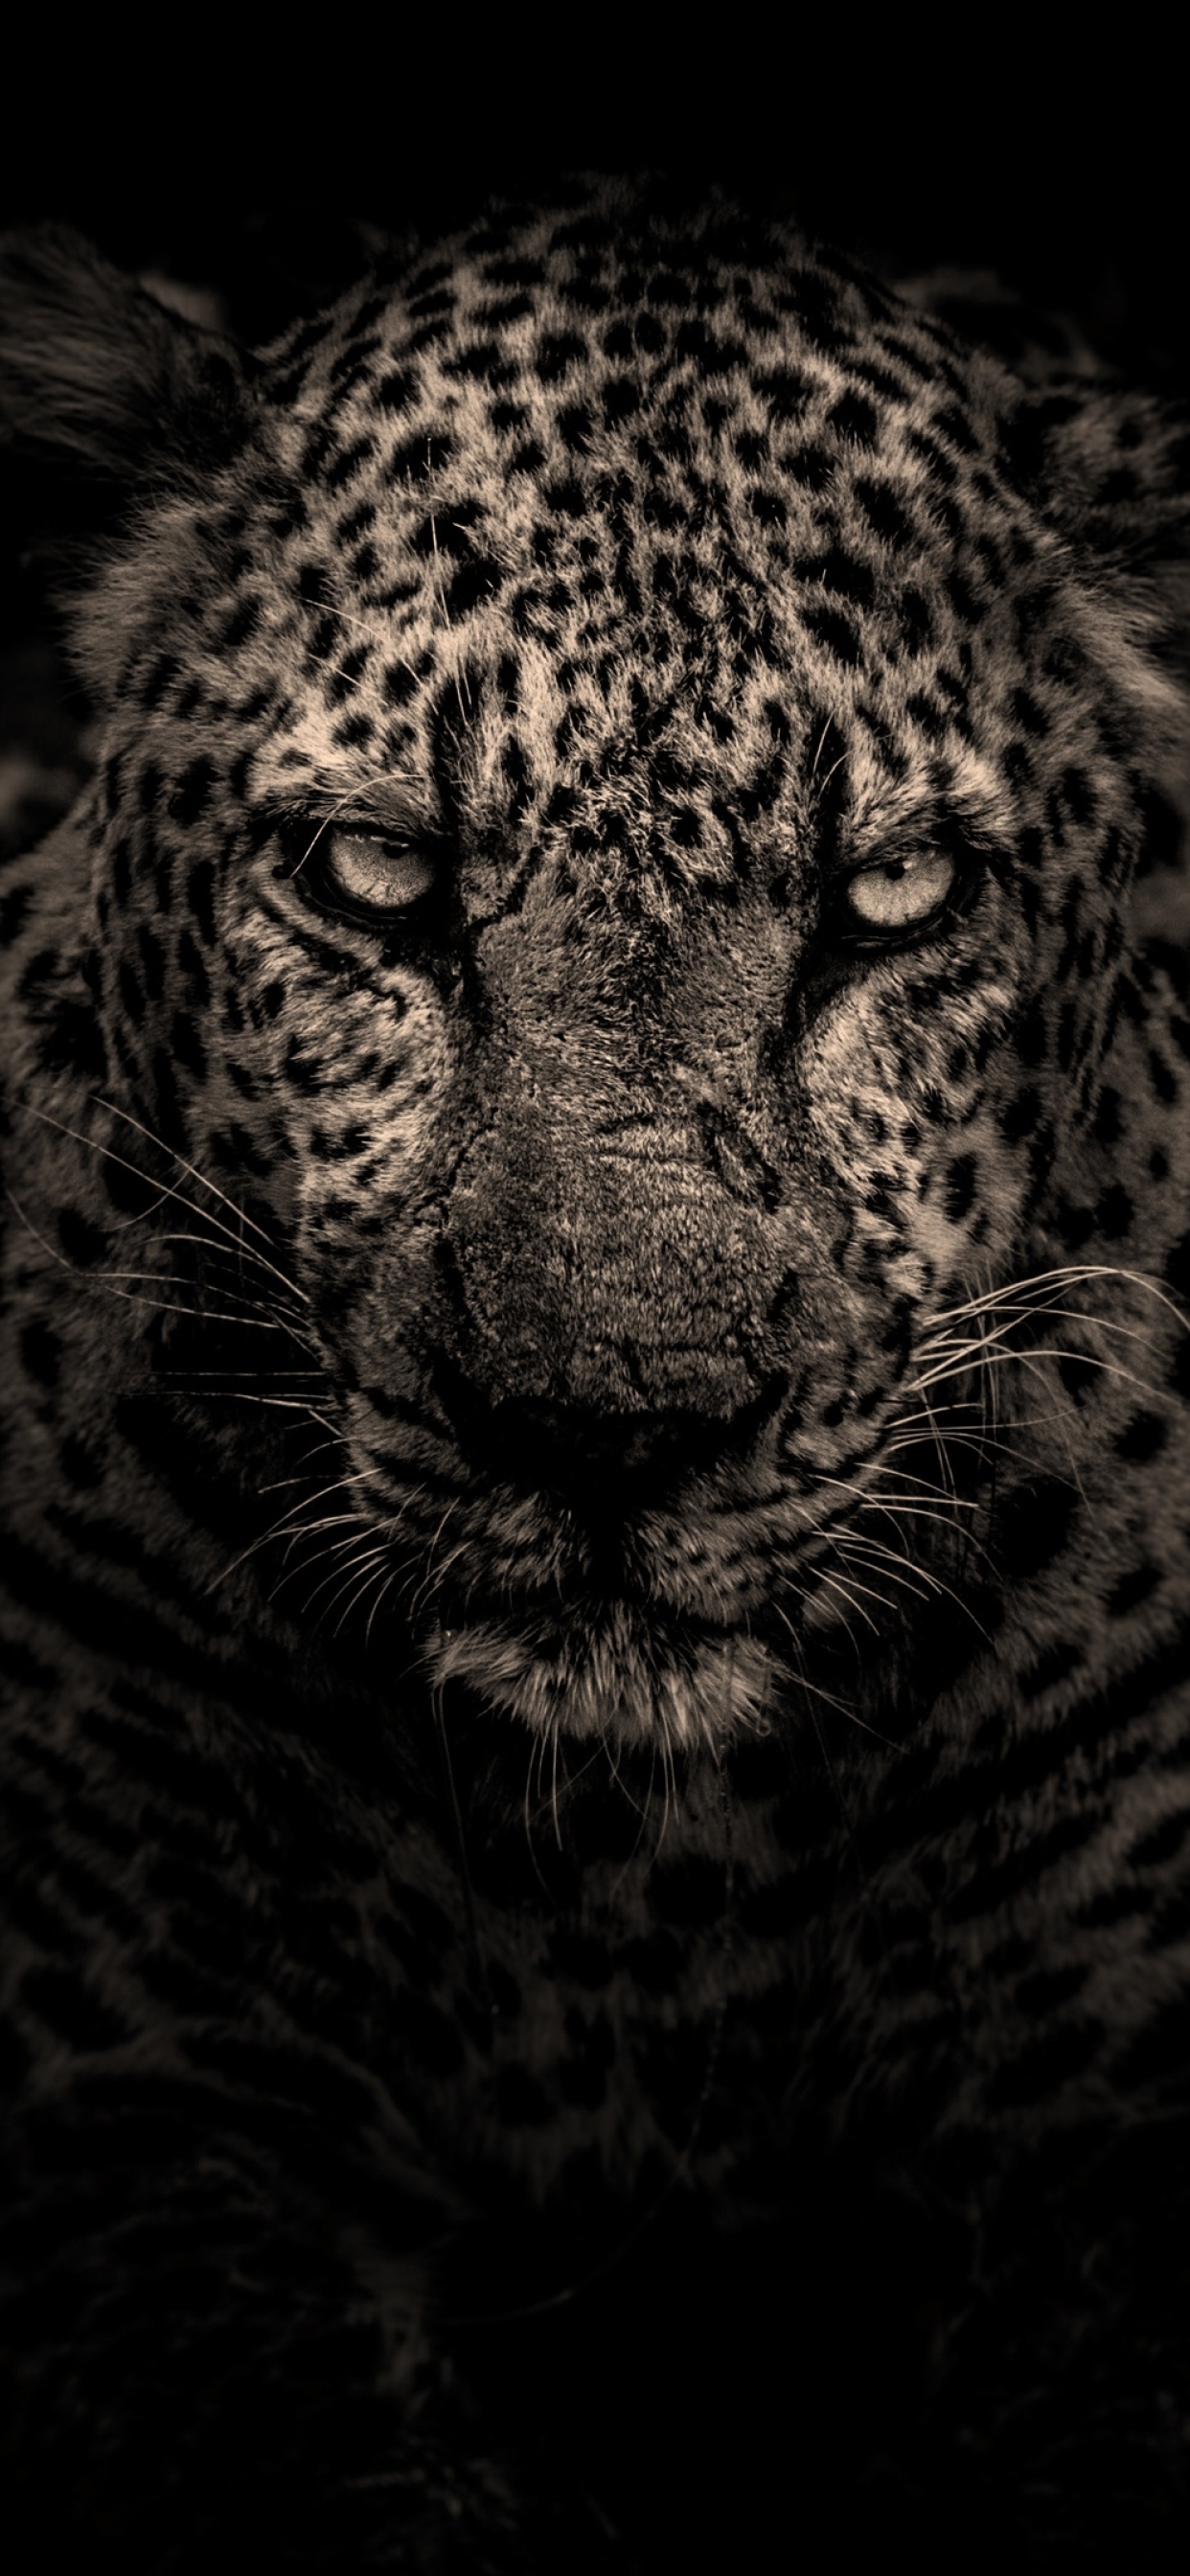 Wallpaper ID 422601  Animal Snow Leopard Phone Wallpaper  828x1792 free  download